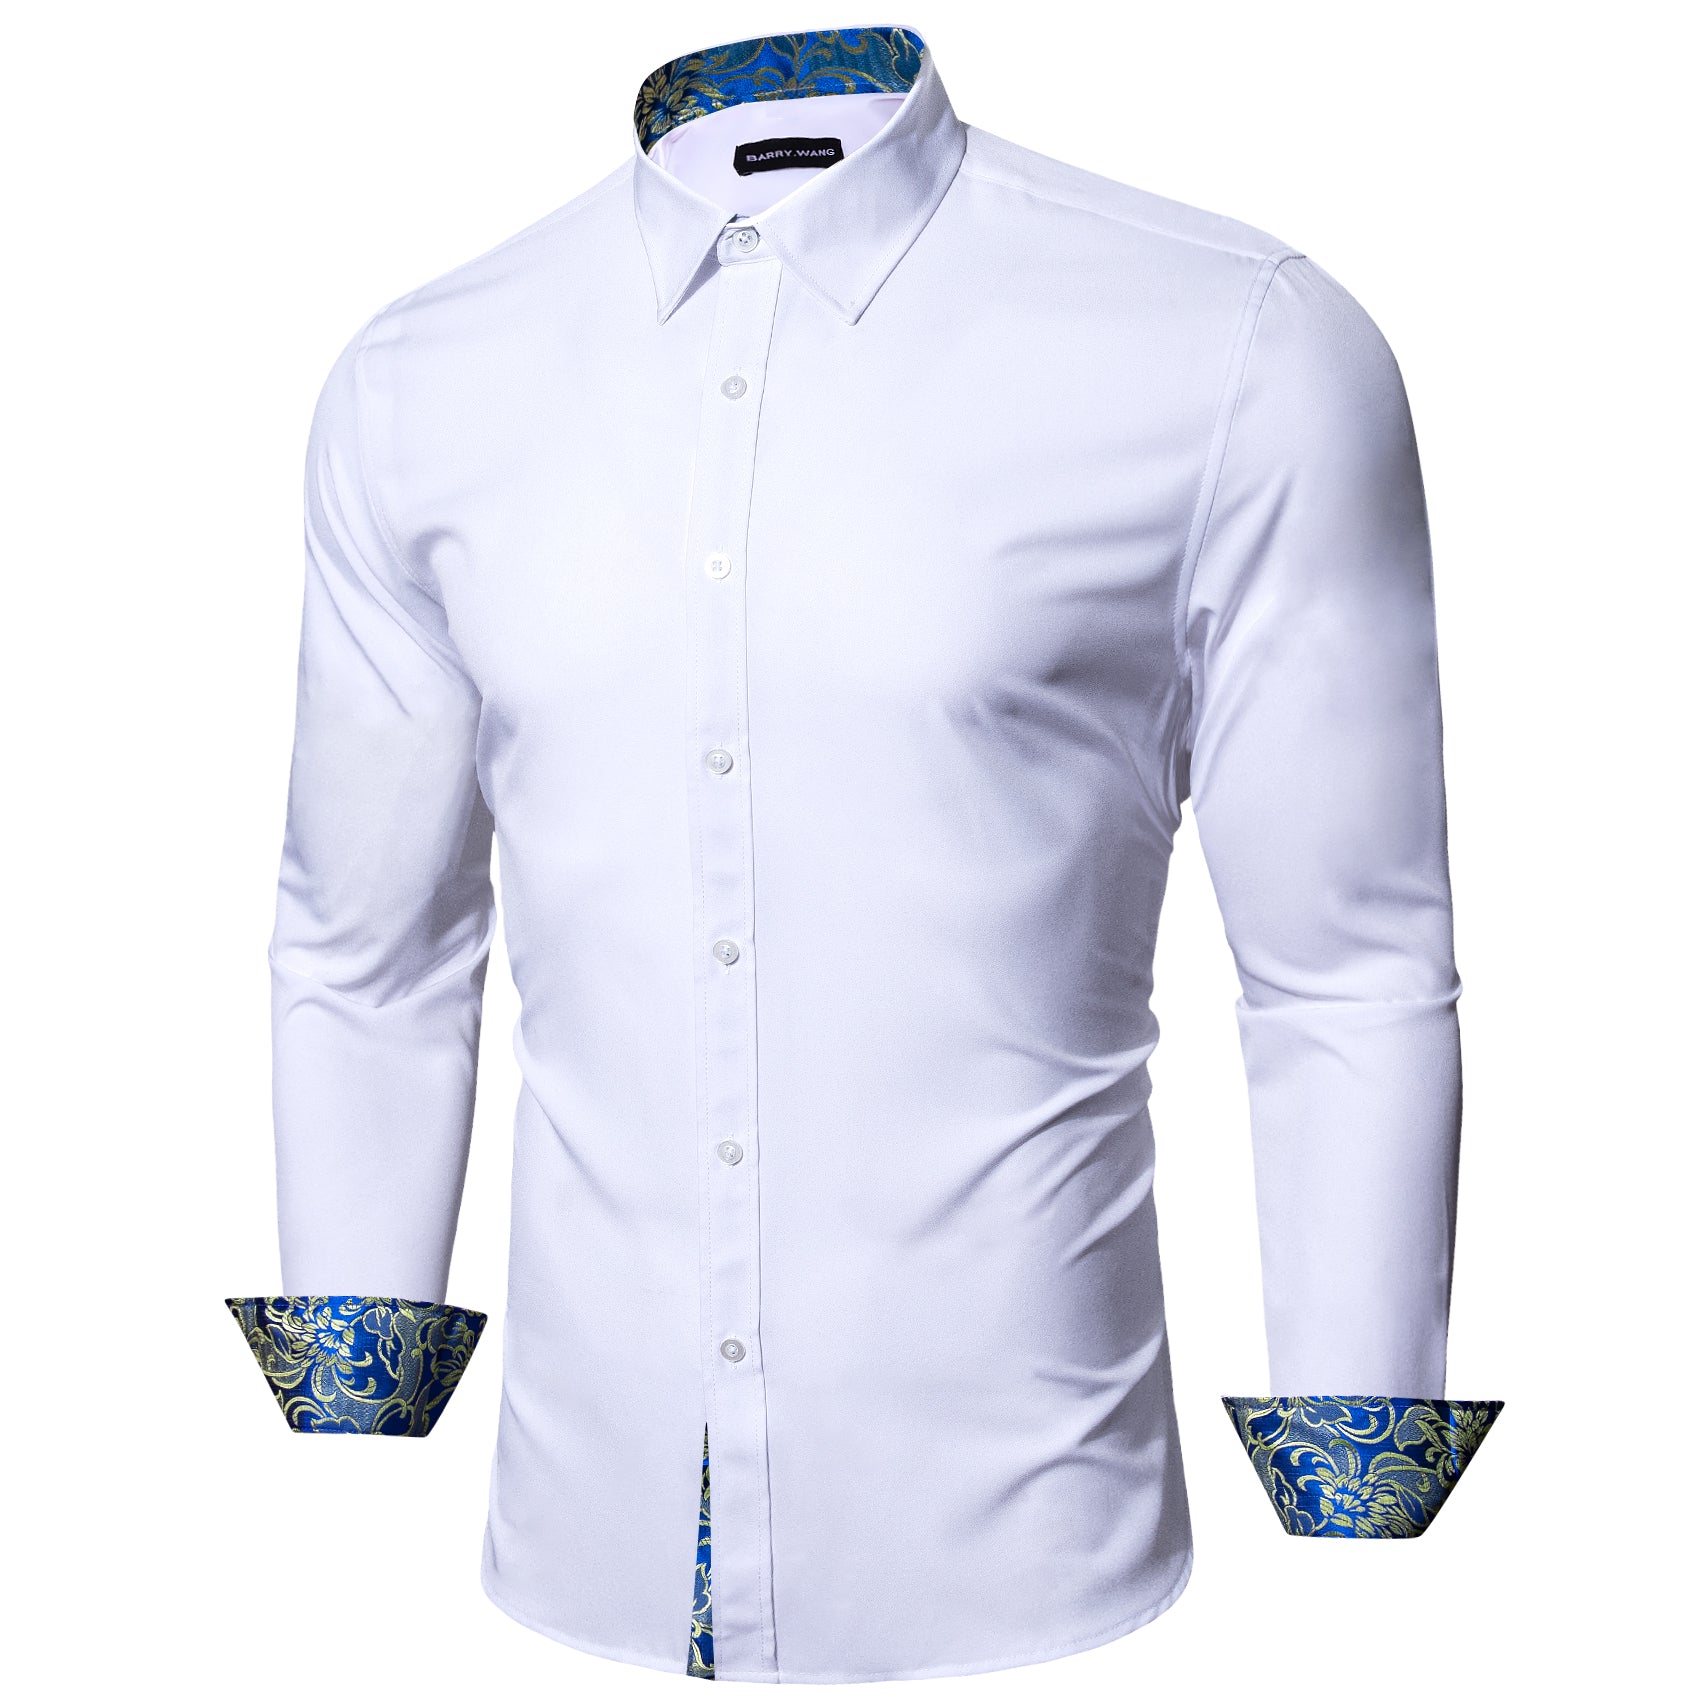 Barry.wang Formal White Blue Splicing Men's Business Shirt